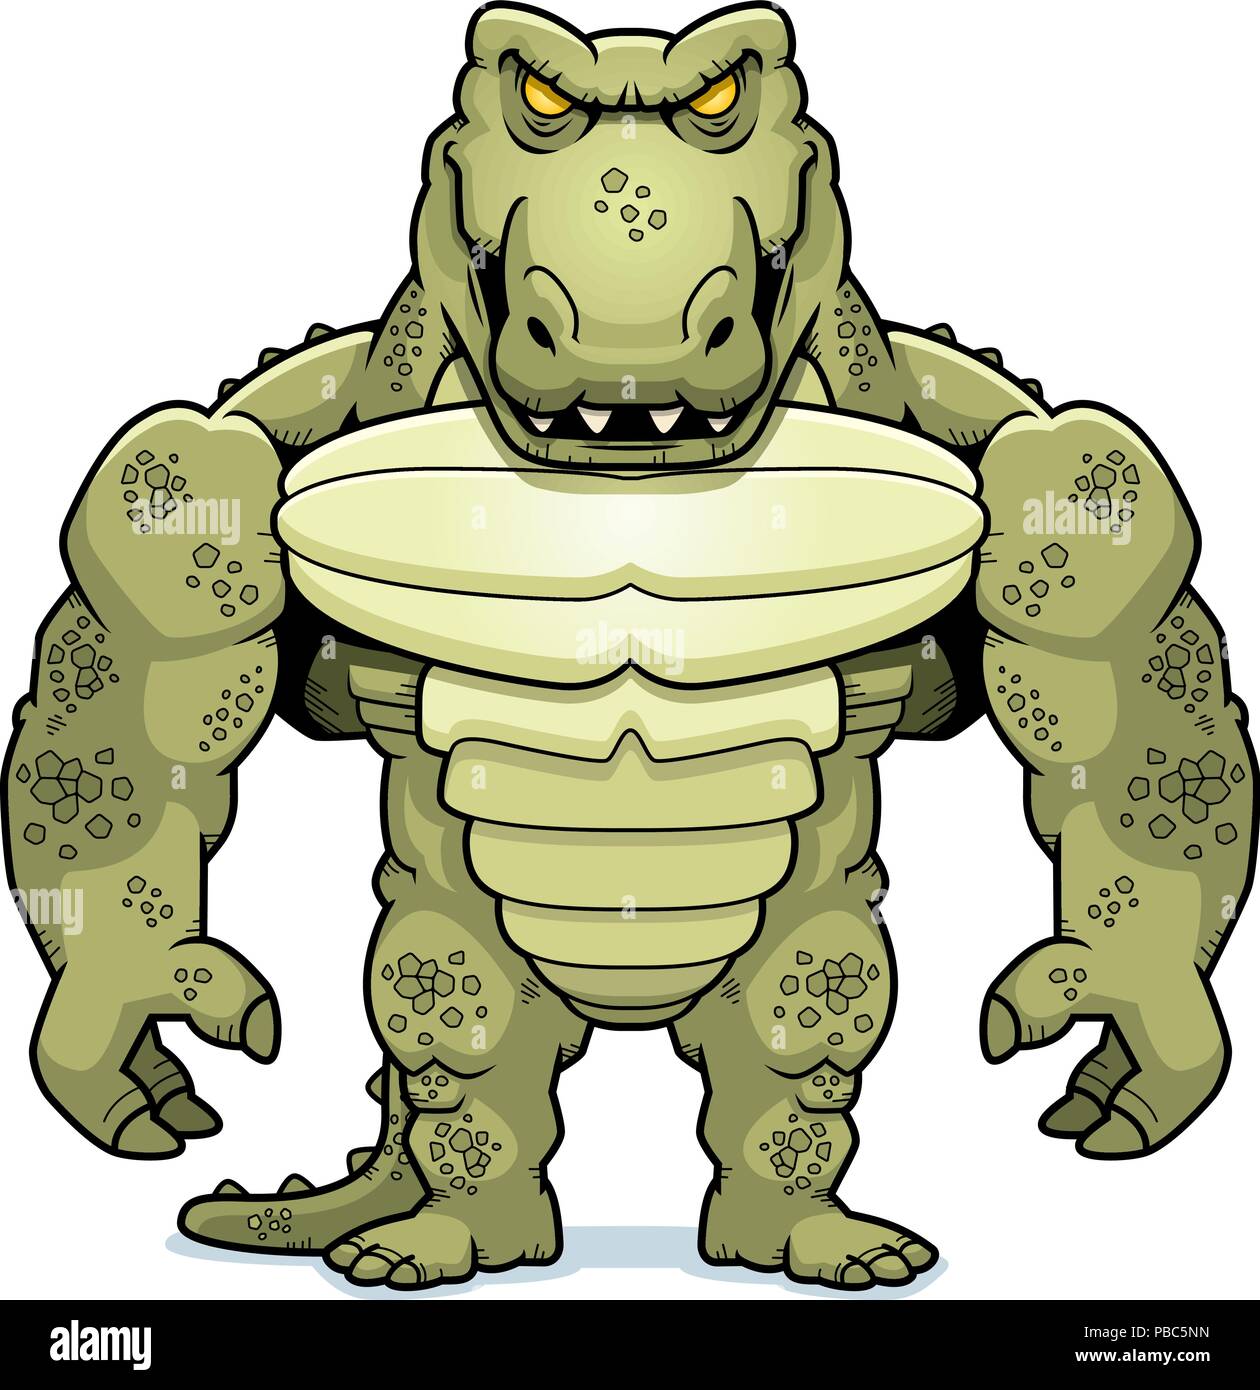 A cartoon illustration of a crocodile monster man. Stock Vector